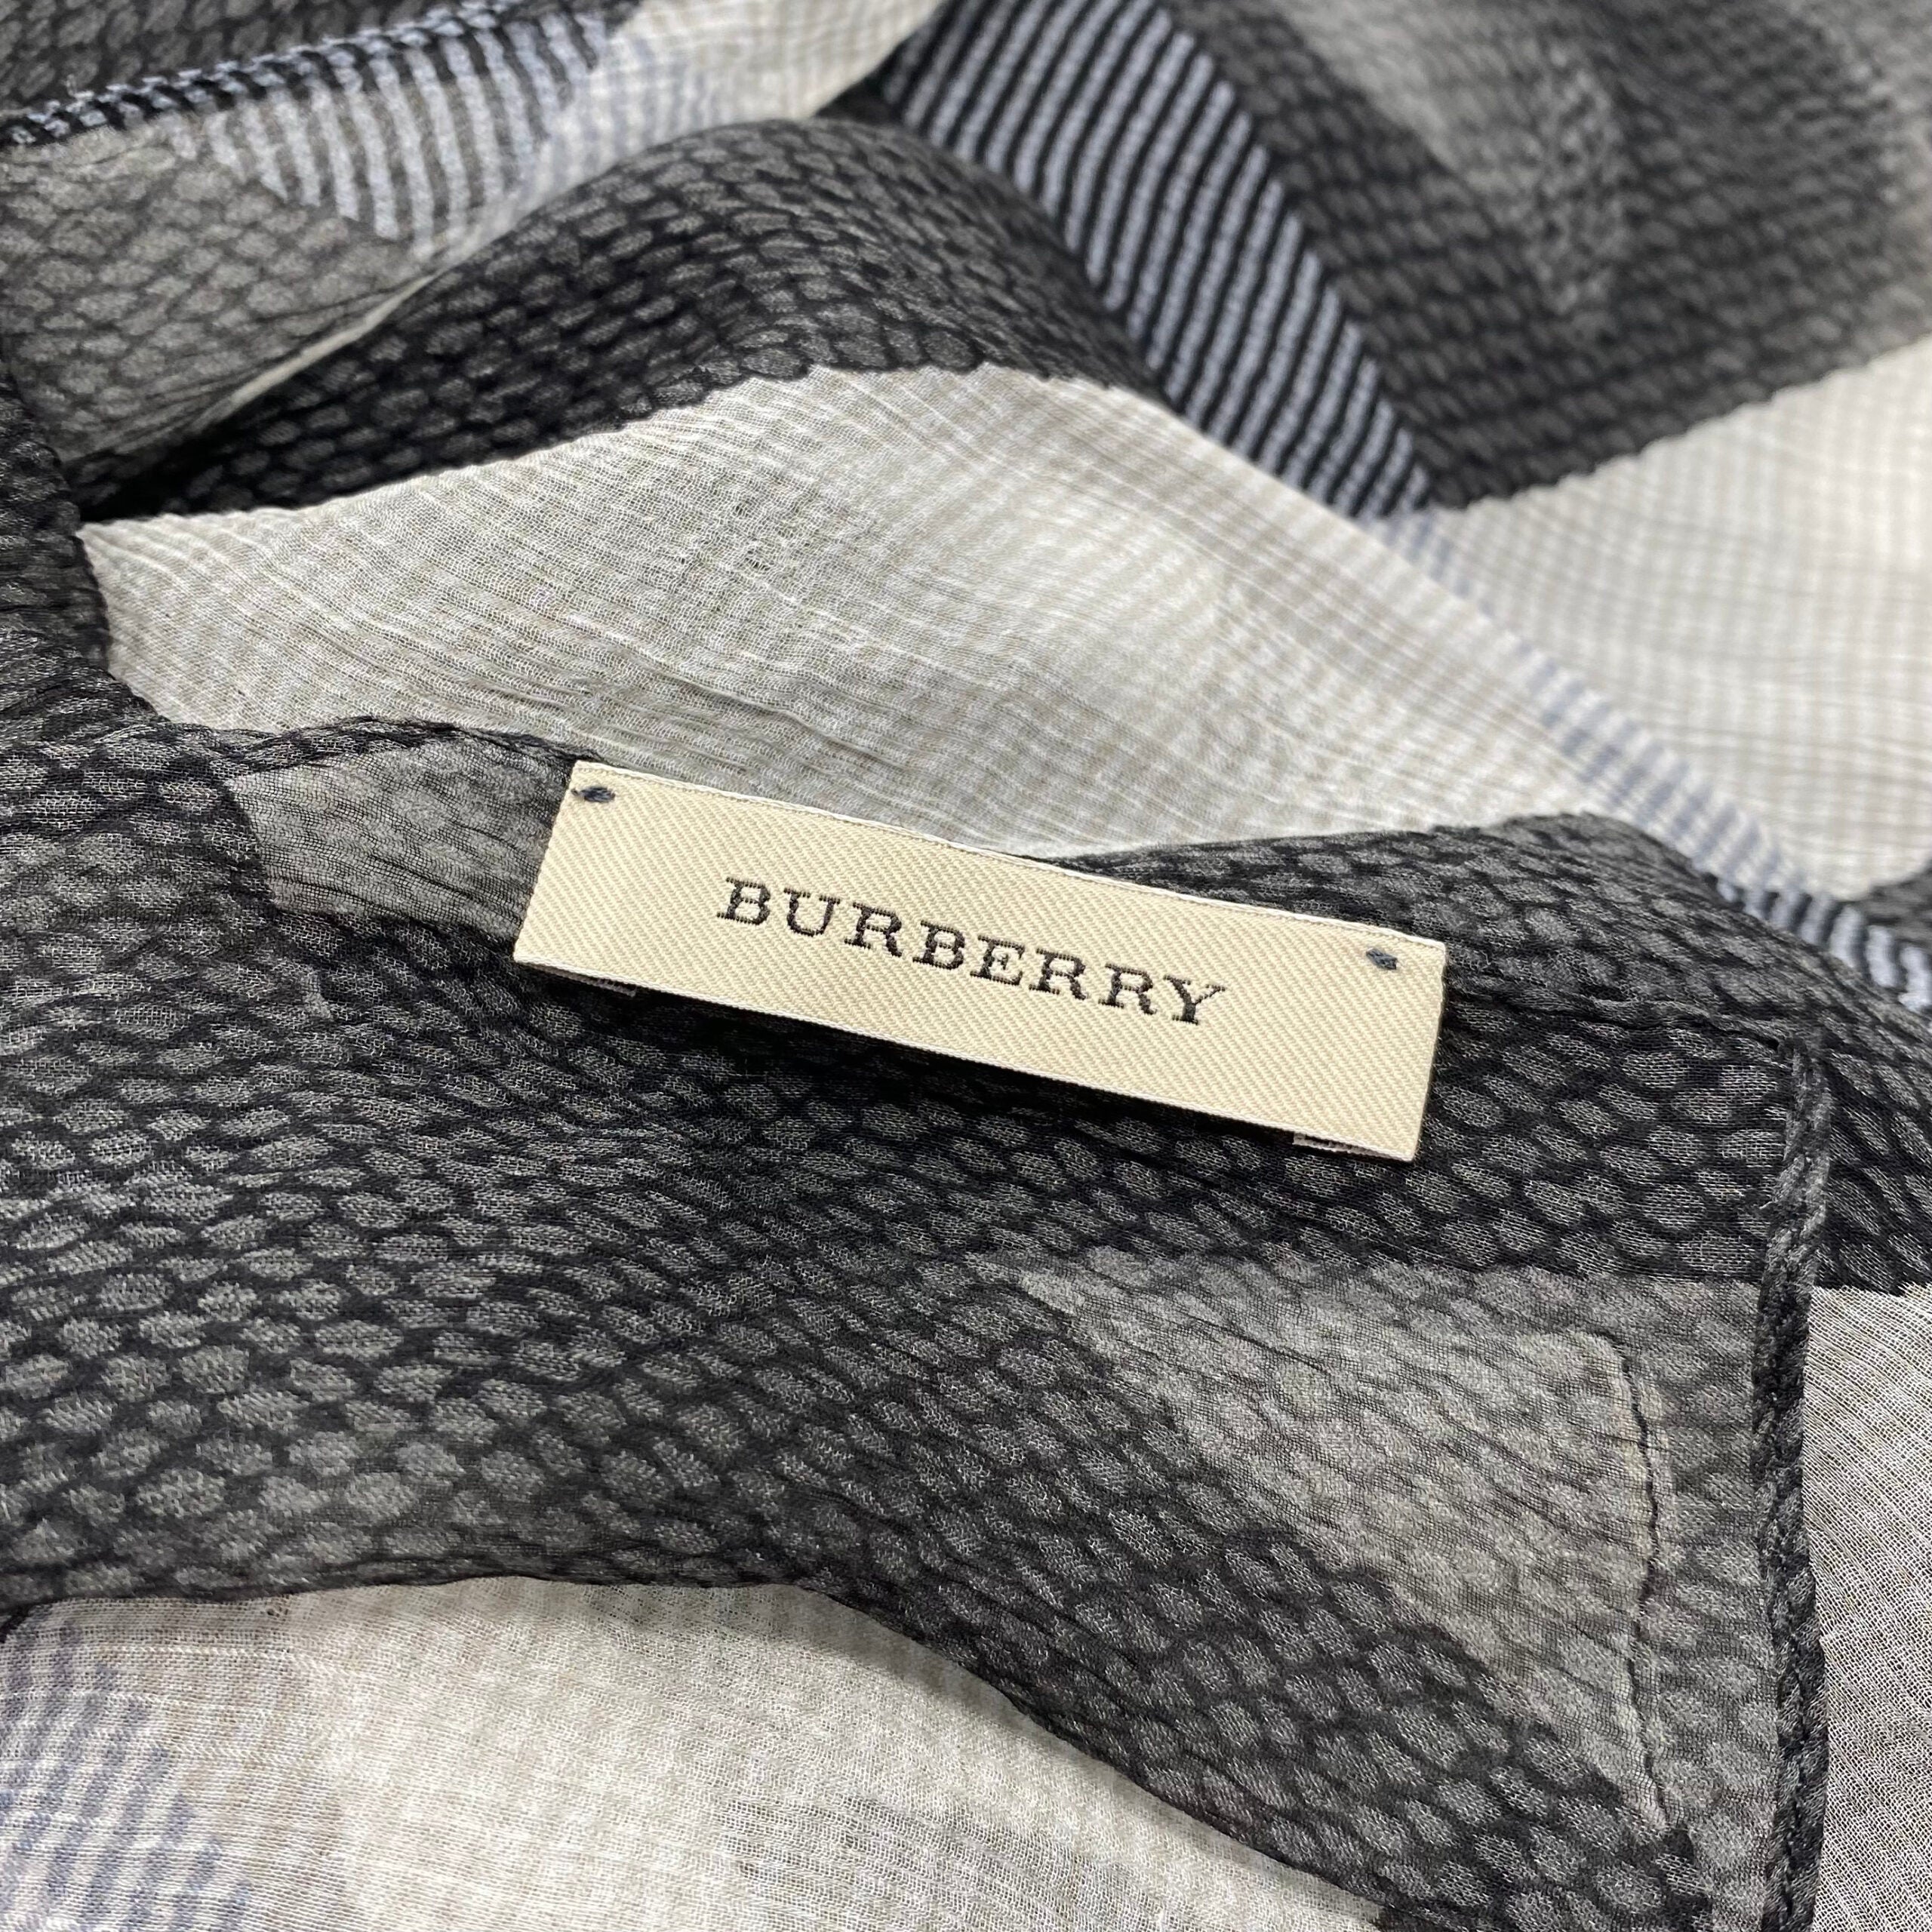 Burberry Black Silk Check Sheer Scarf